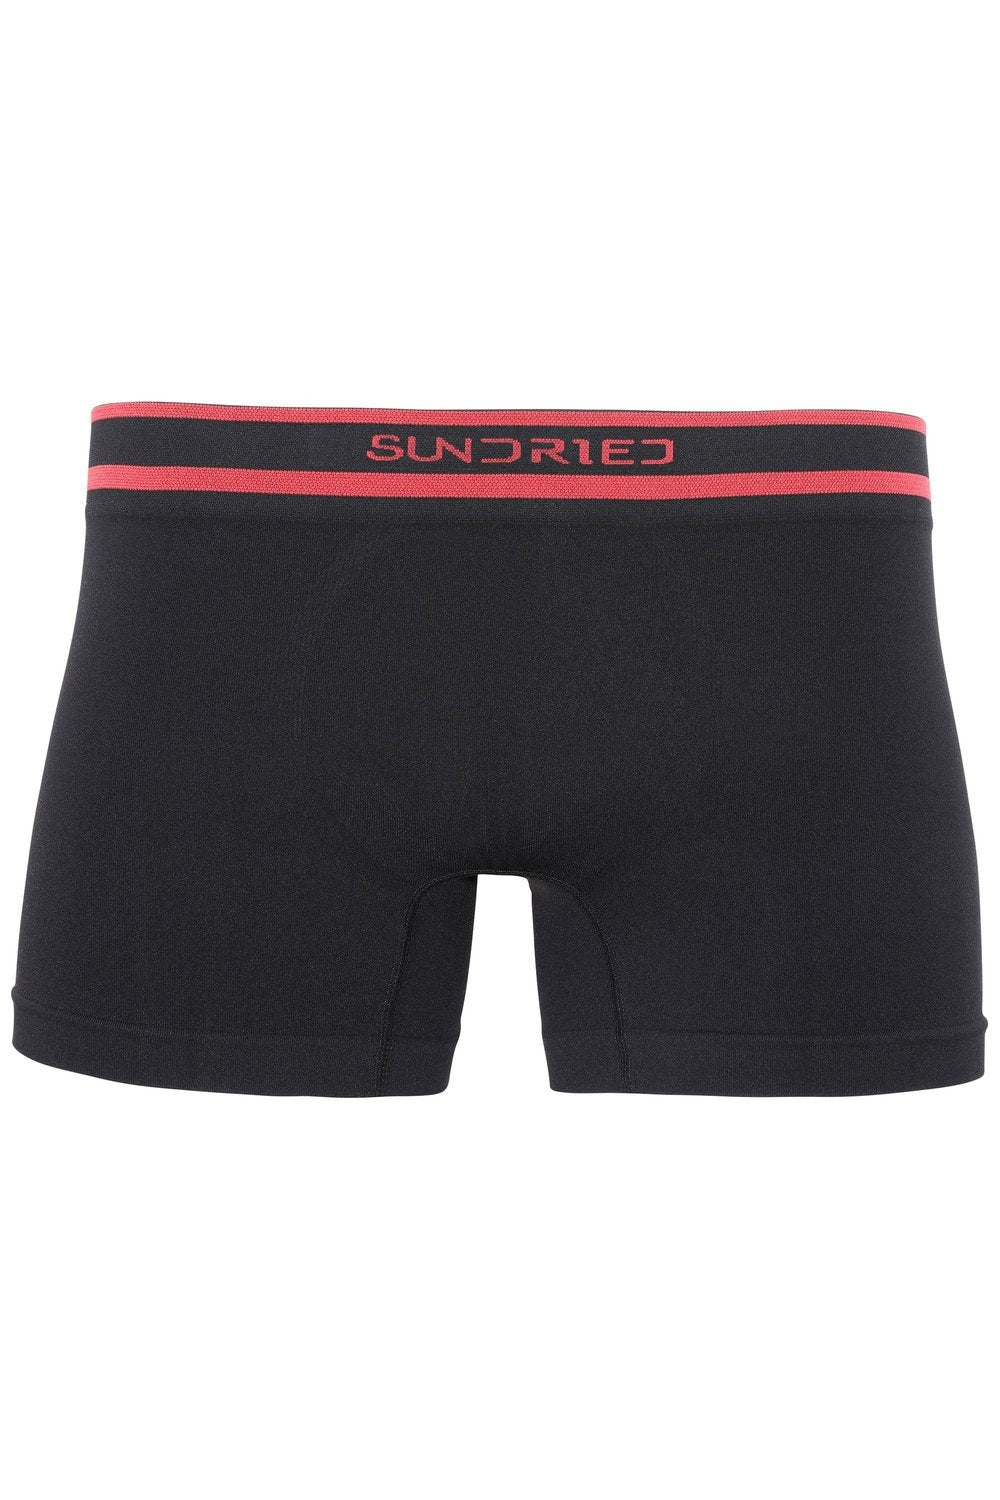 Sundried Etna Seamless Boxer Shorts Underwear Activewear